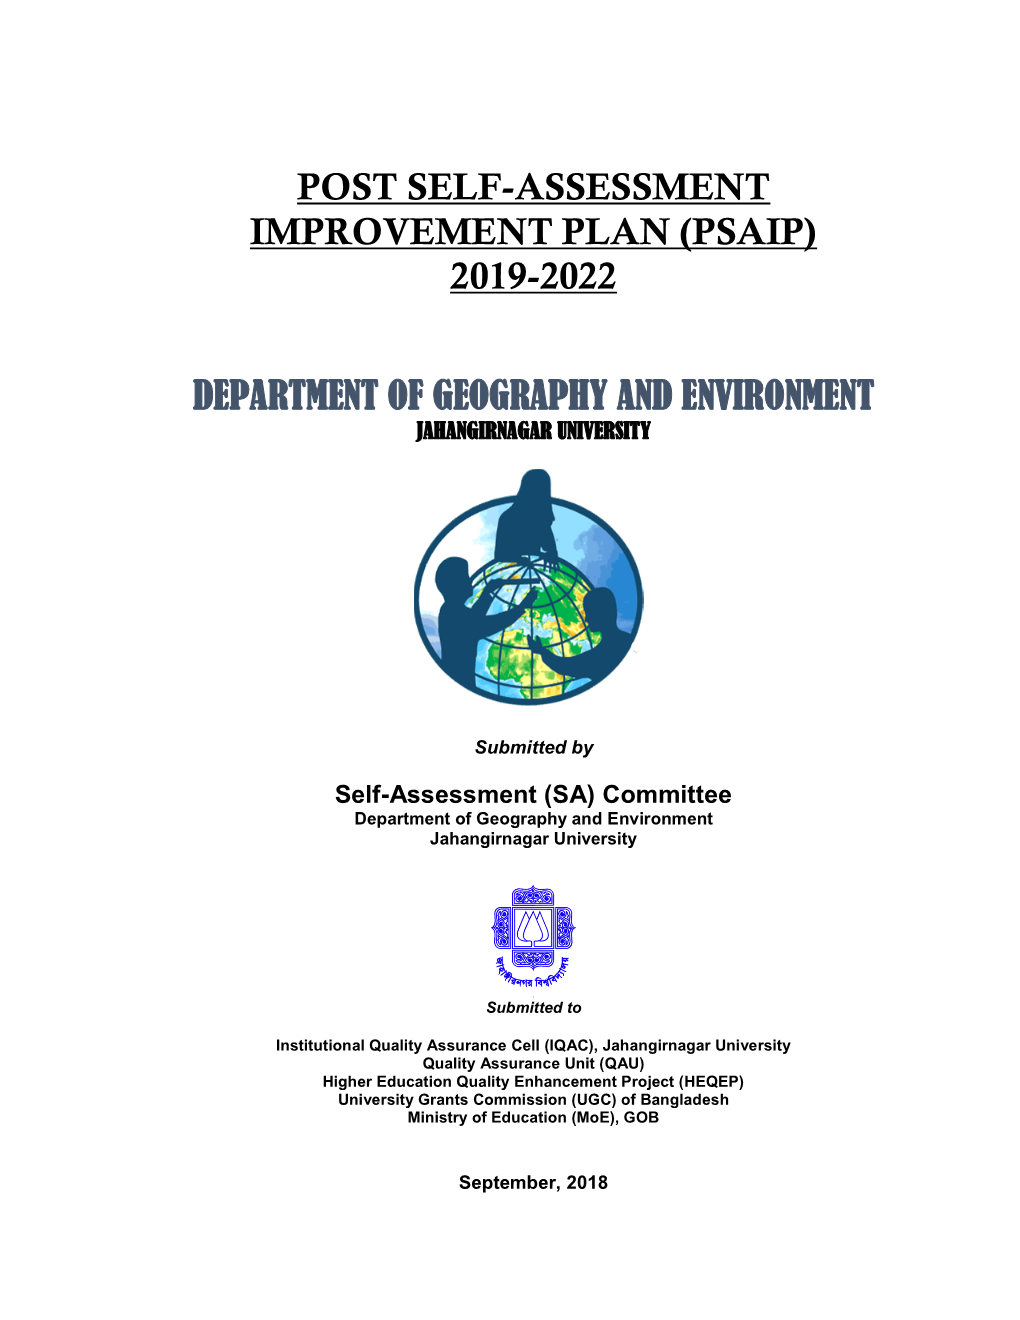 Post Self-Assessment Improvement Plan (Psaip) 2019-2022